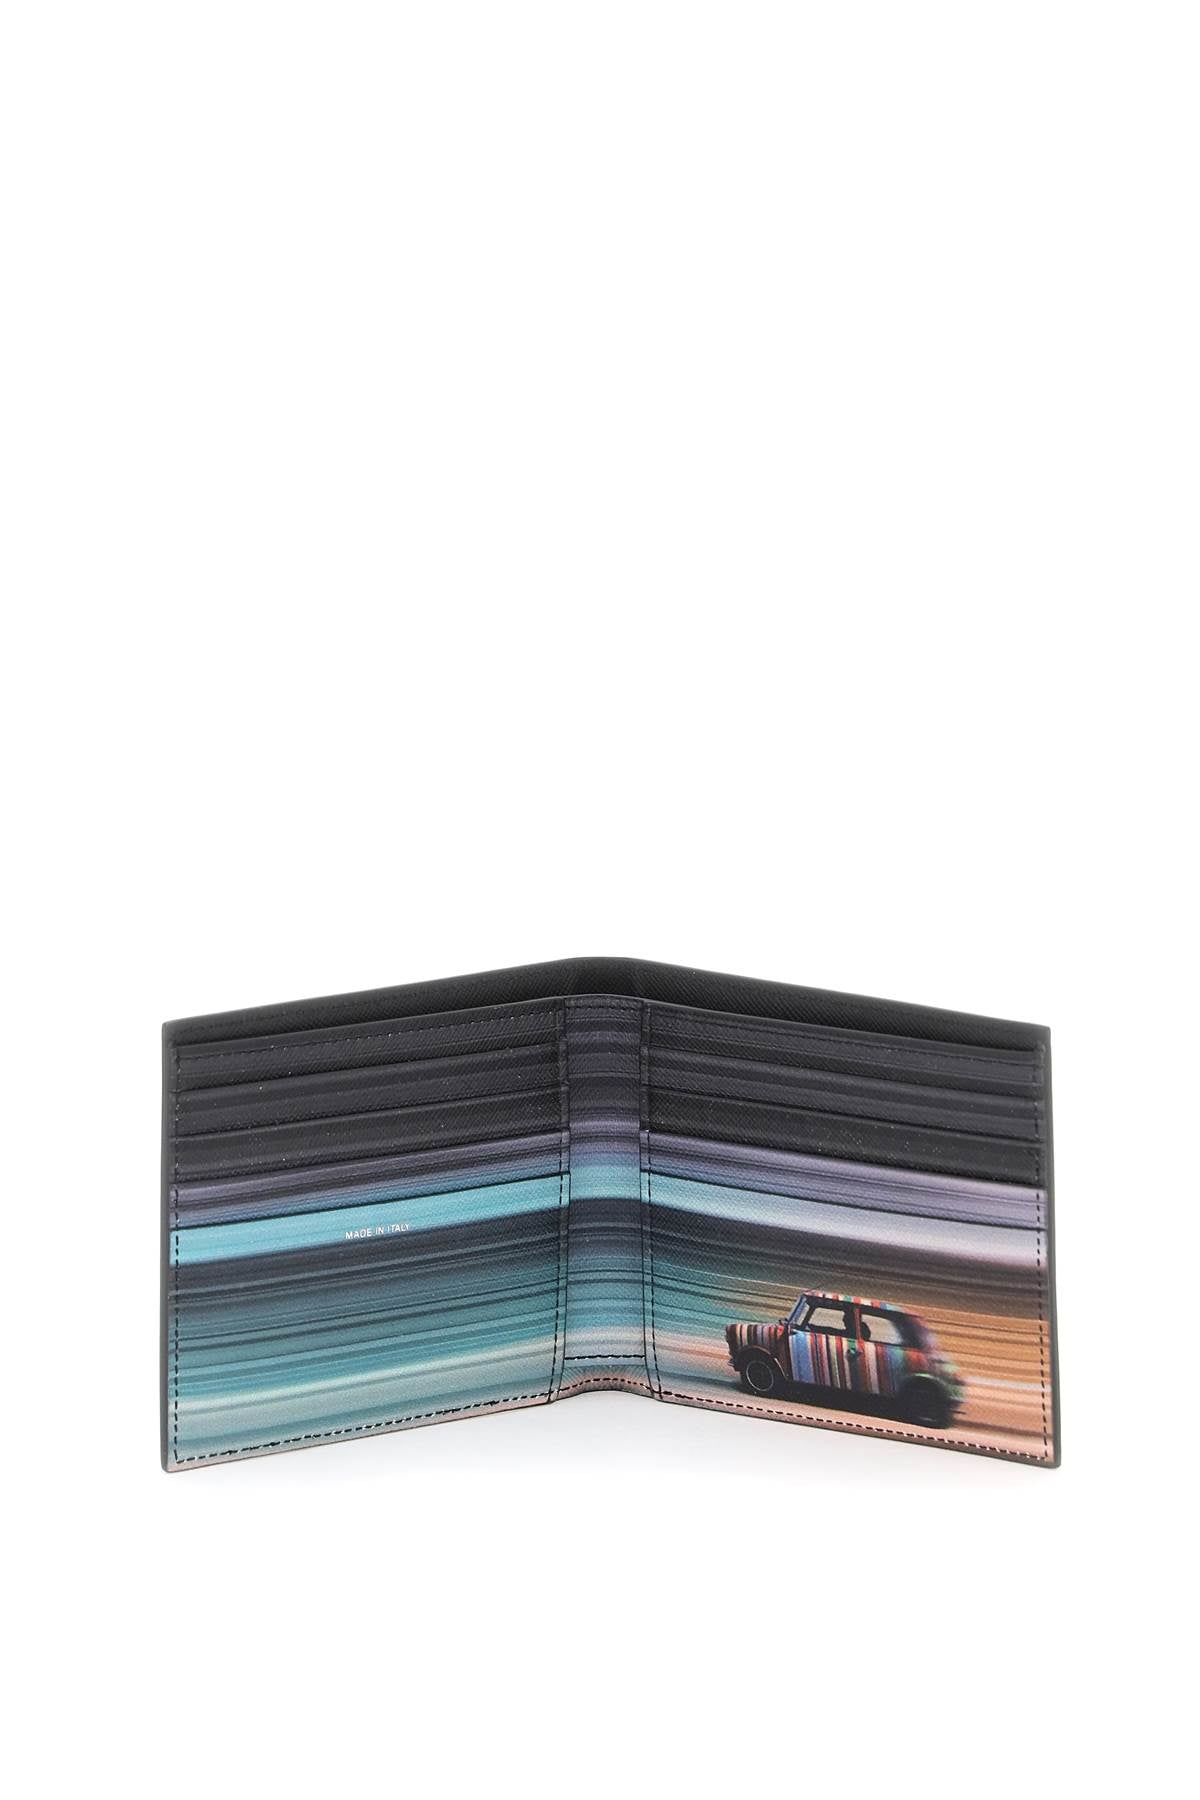 Paul smith mini blur wallet-1